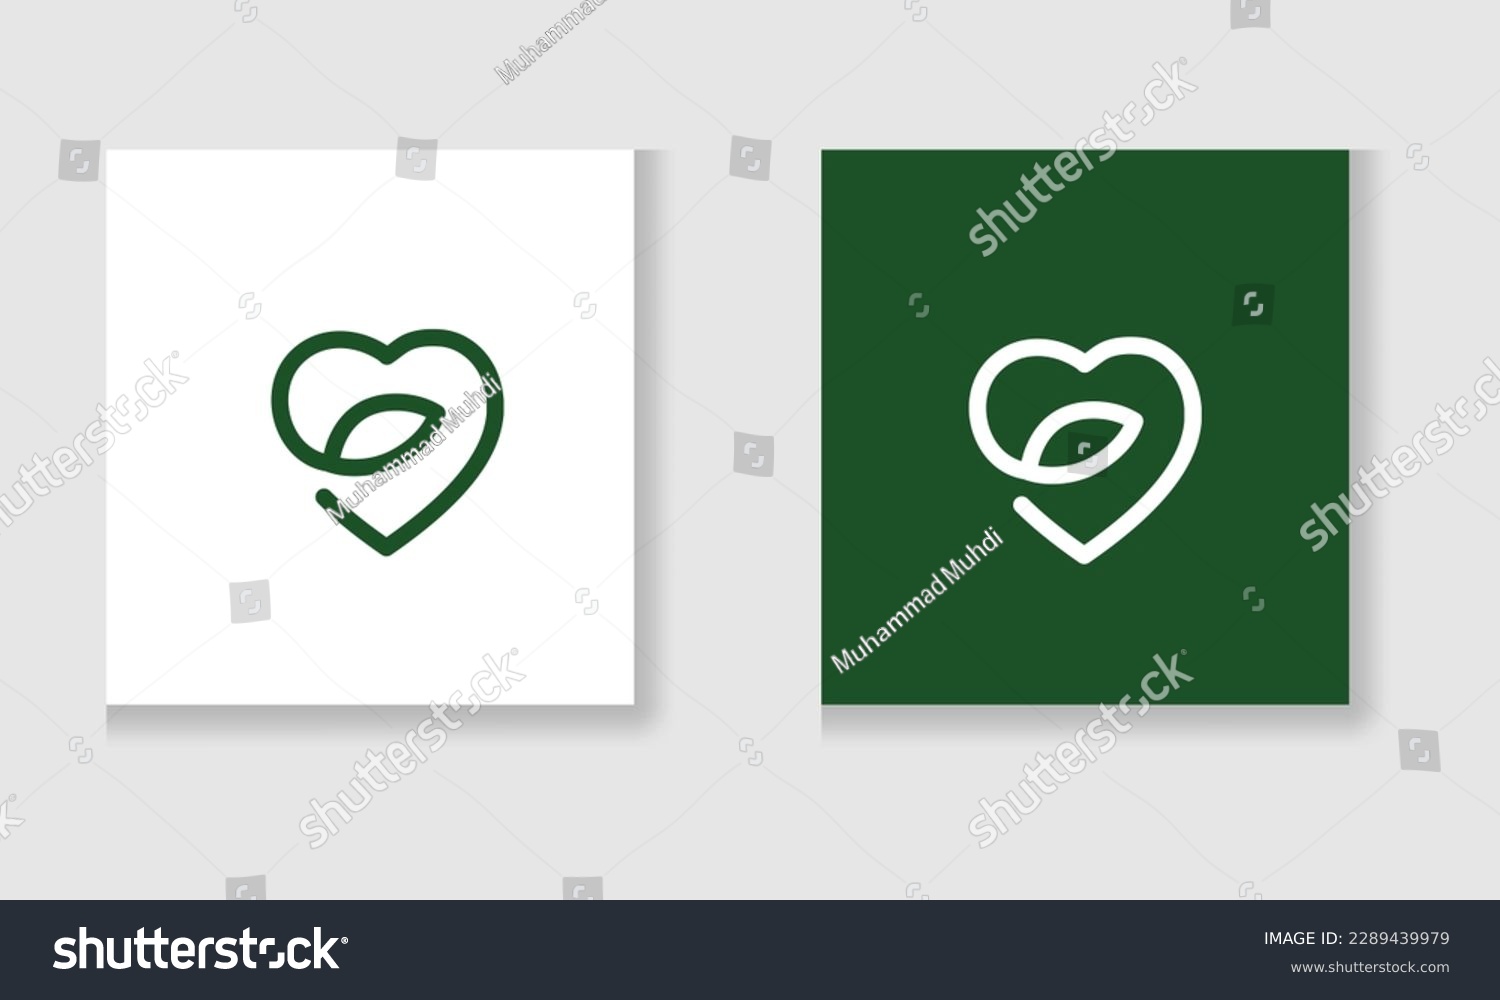 SVG of organic logo. heart leaf icon symbol logo. svg